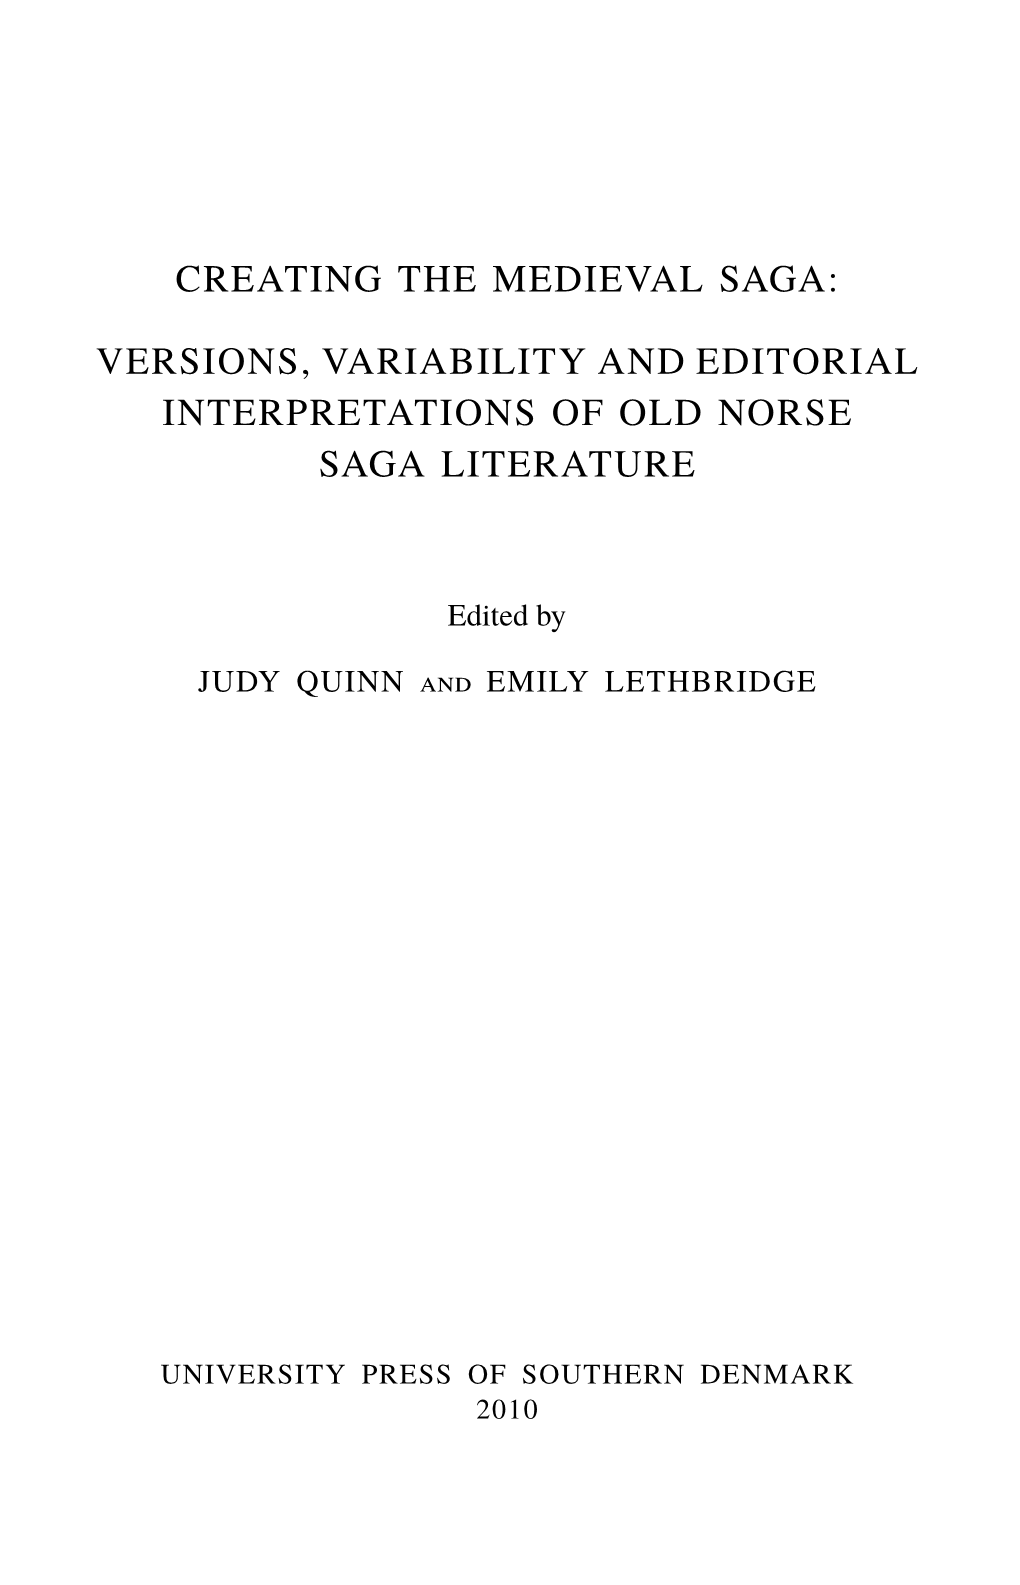 Creating the Medieval Saga: Versions, Variability and Editorial